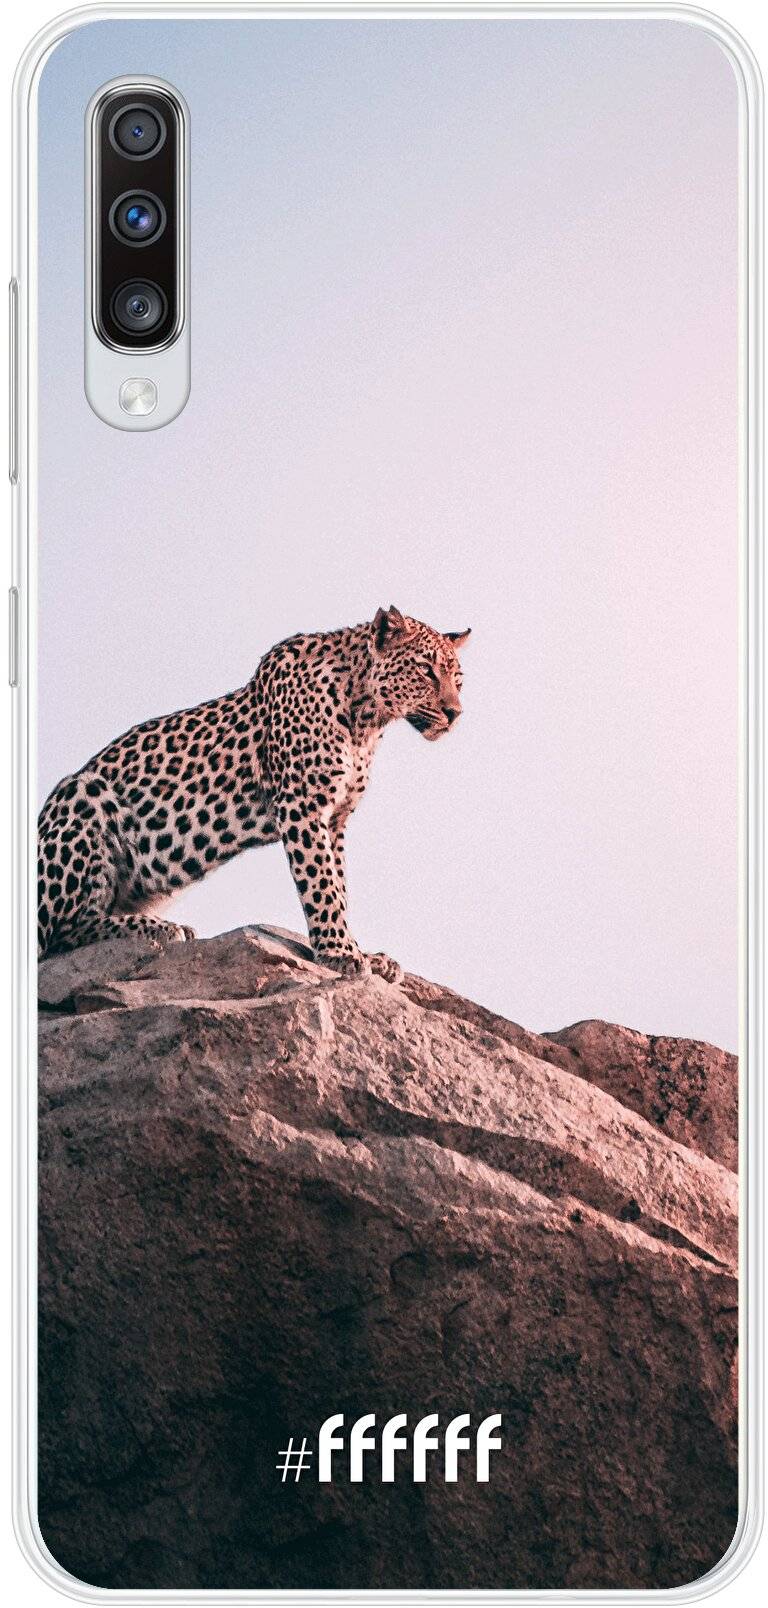 Leopard Galaxy A70